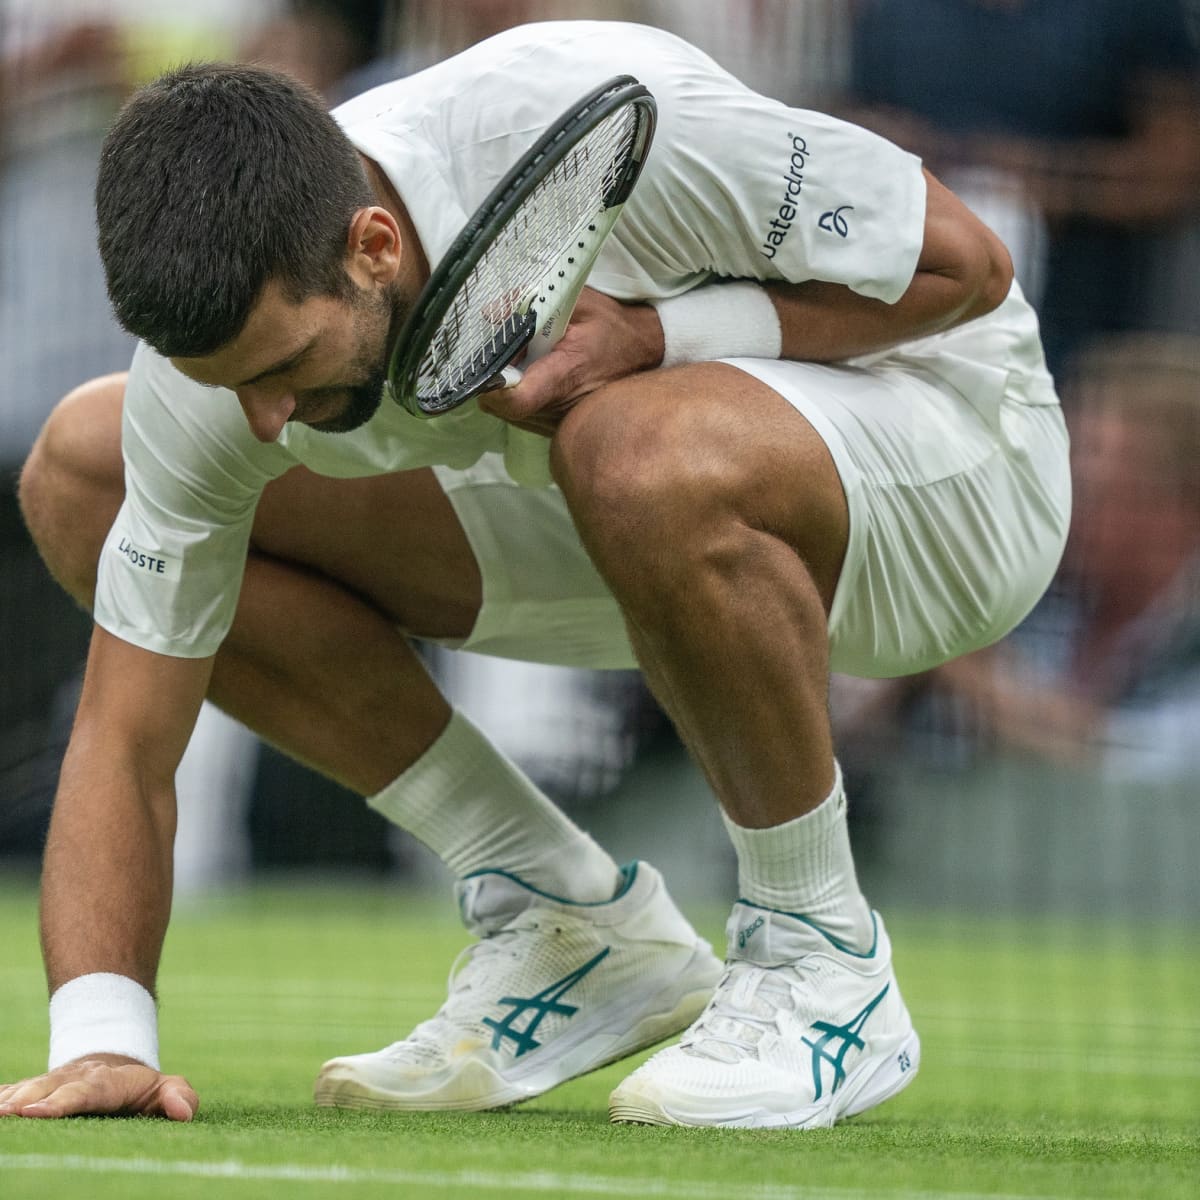 Tennis fans amused by “23” detail on Novak Djokovics tennis shoes